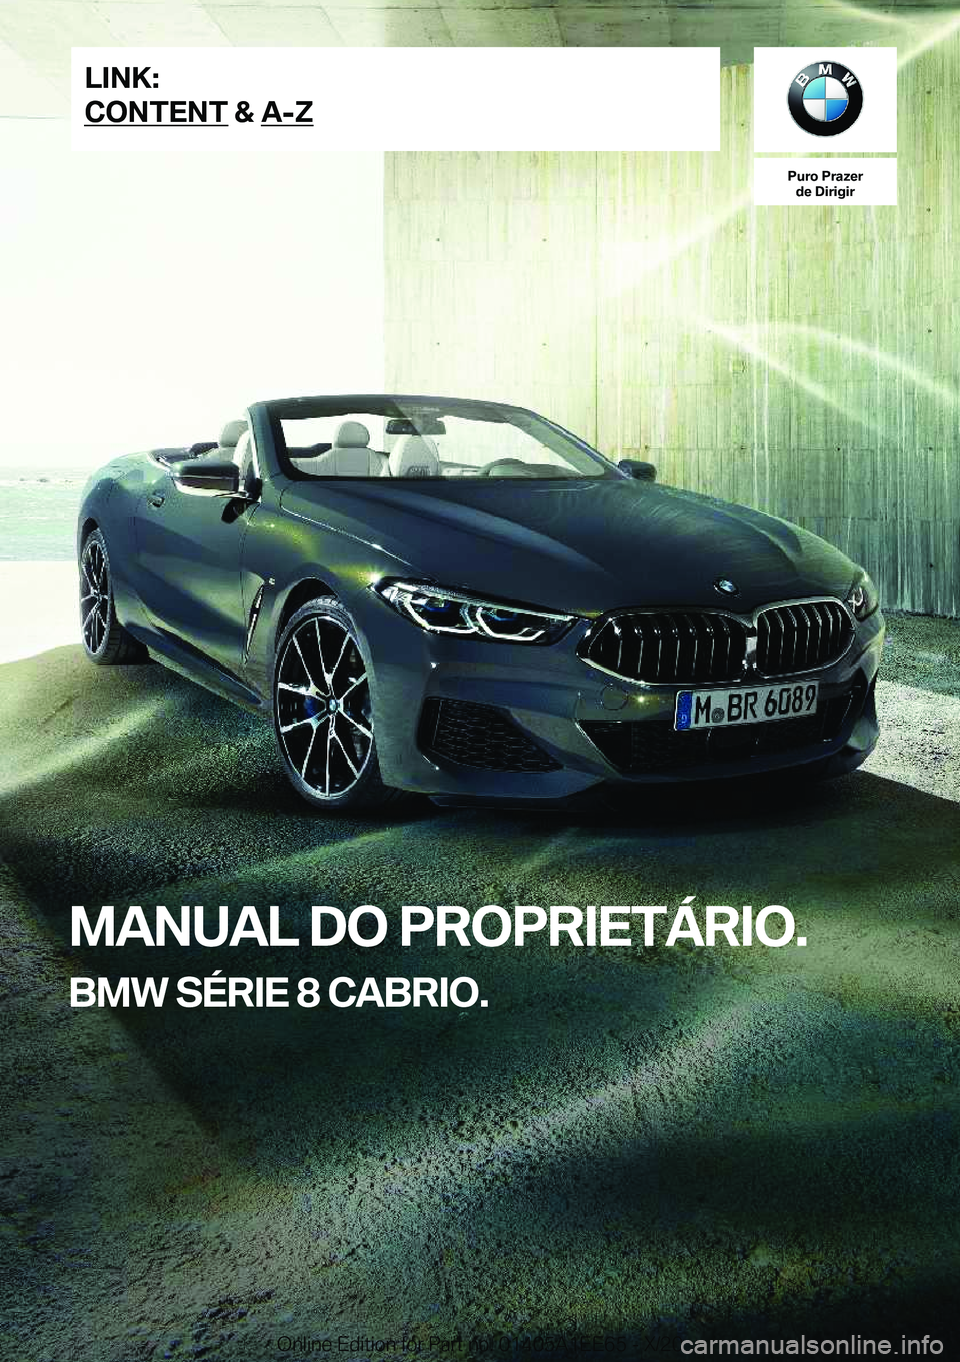 BMW 8 SERIES CONVERTIBLE 2021  Manual do condutor (in Portuguese) �P�u�r�o��P�r�a�z�e�r�d�e��D�i�r�i�g�i�r
�M�A�N�U�A�L��D�O��P�R�O�P�R�I�E�T�Á�R�I�O�.
�B�M�W��S�